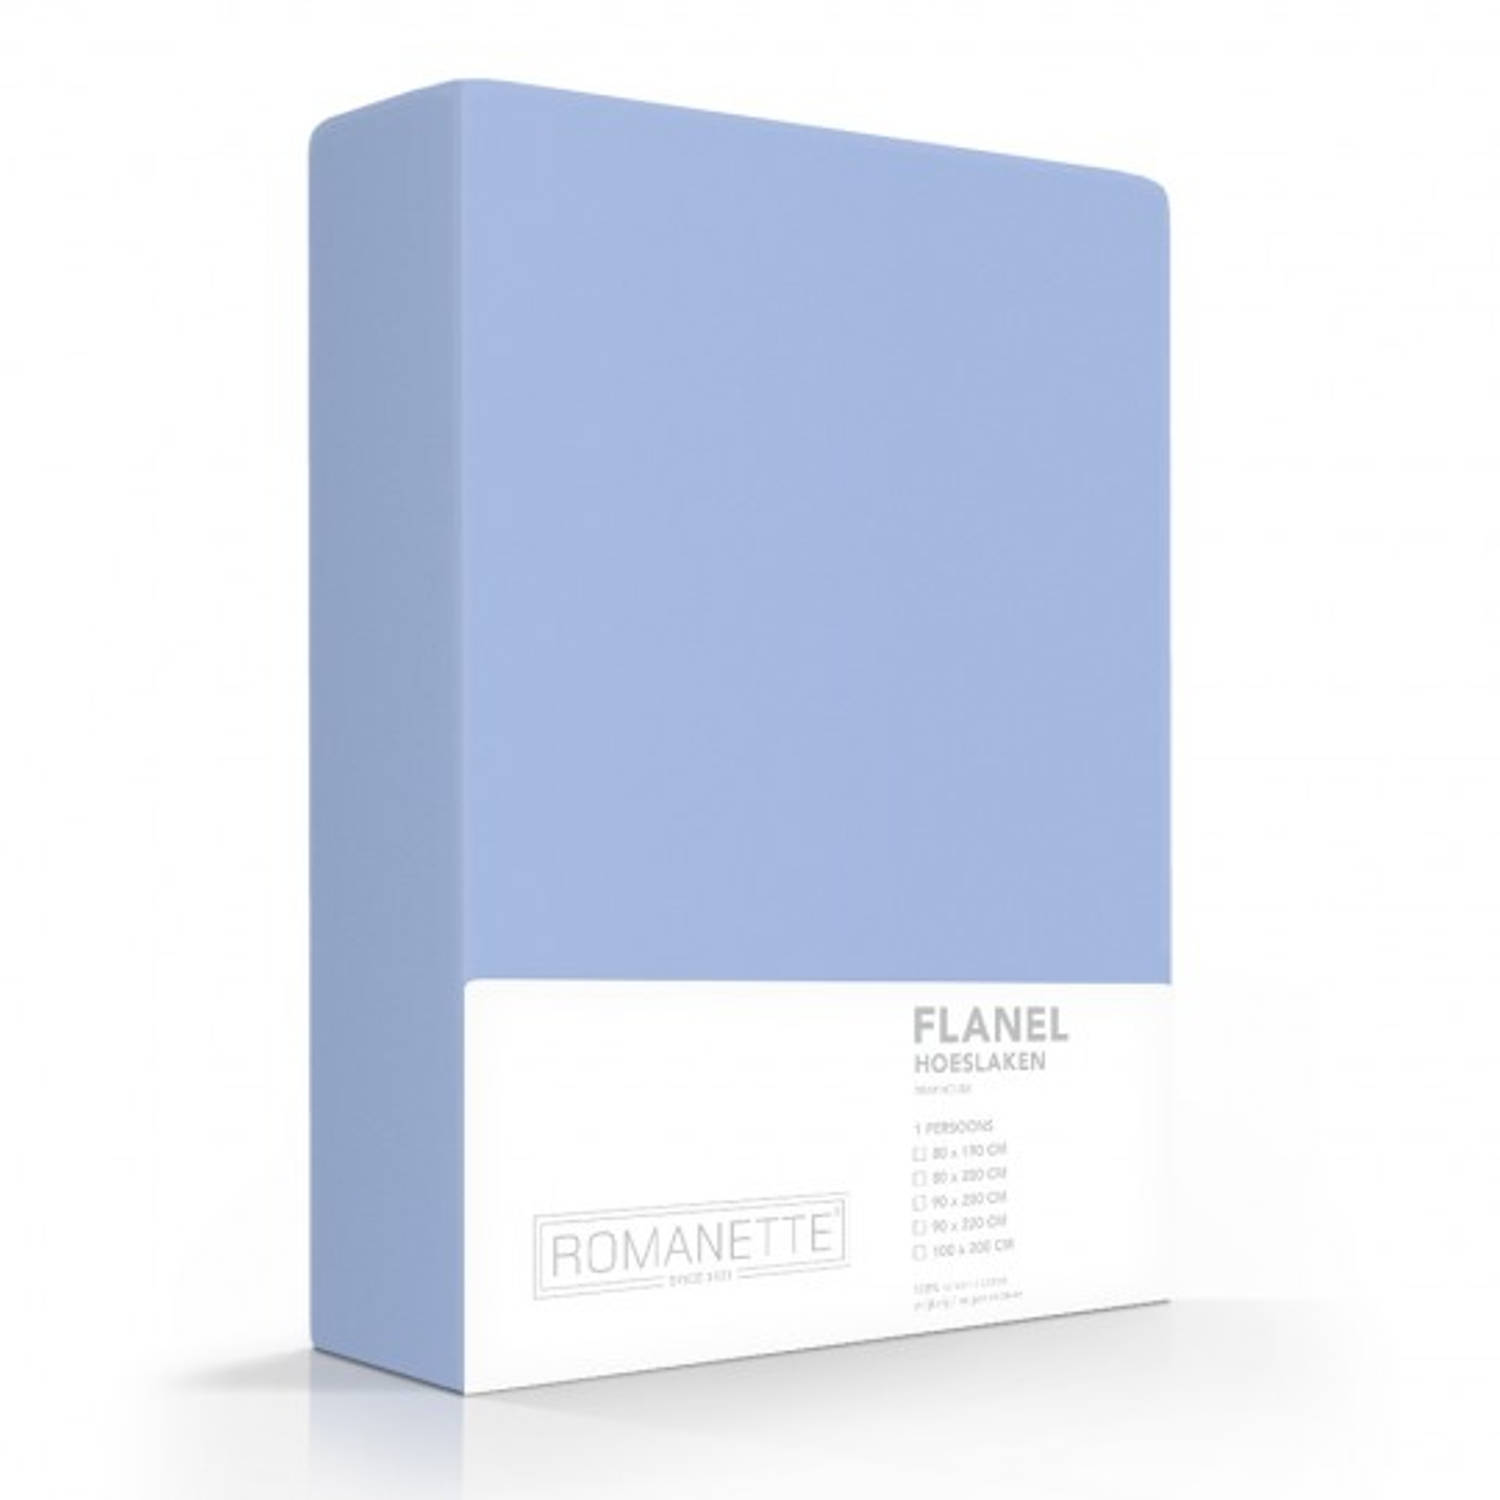 Romanette Flanellen Hoeslaken -180 X 220 Cm - Blauw